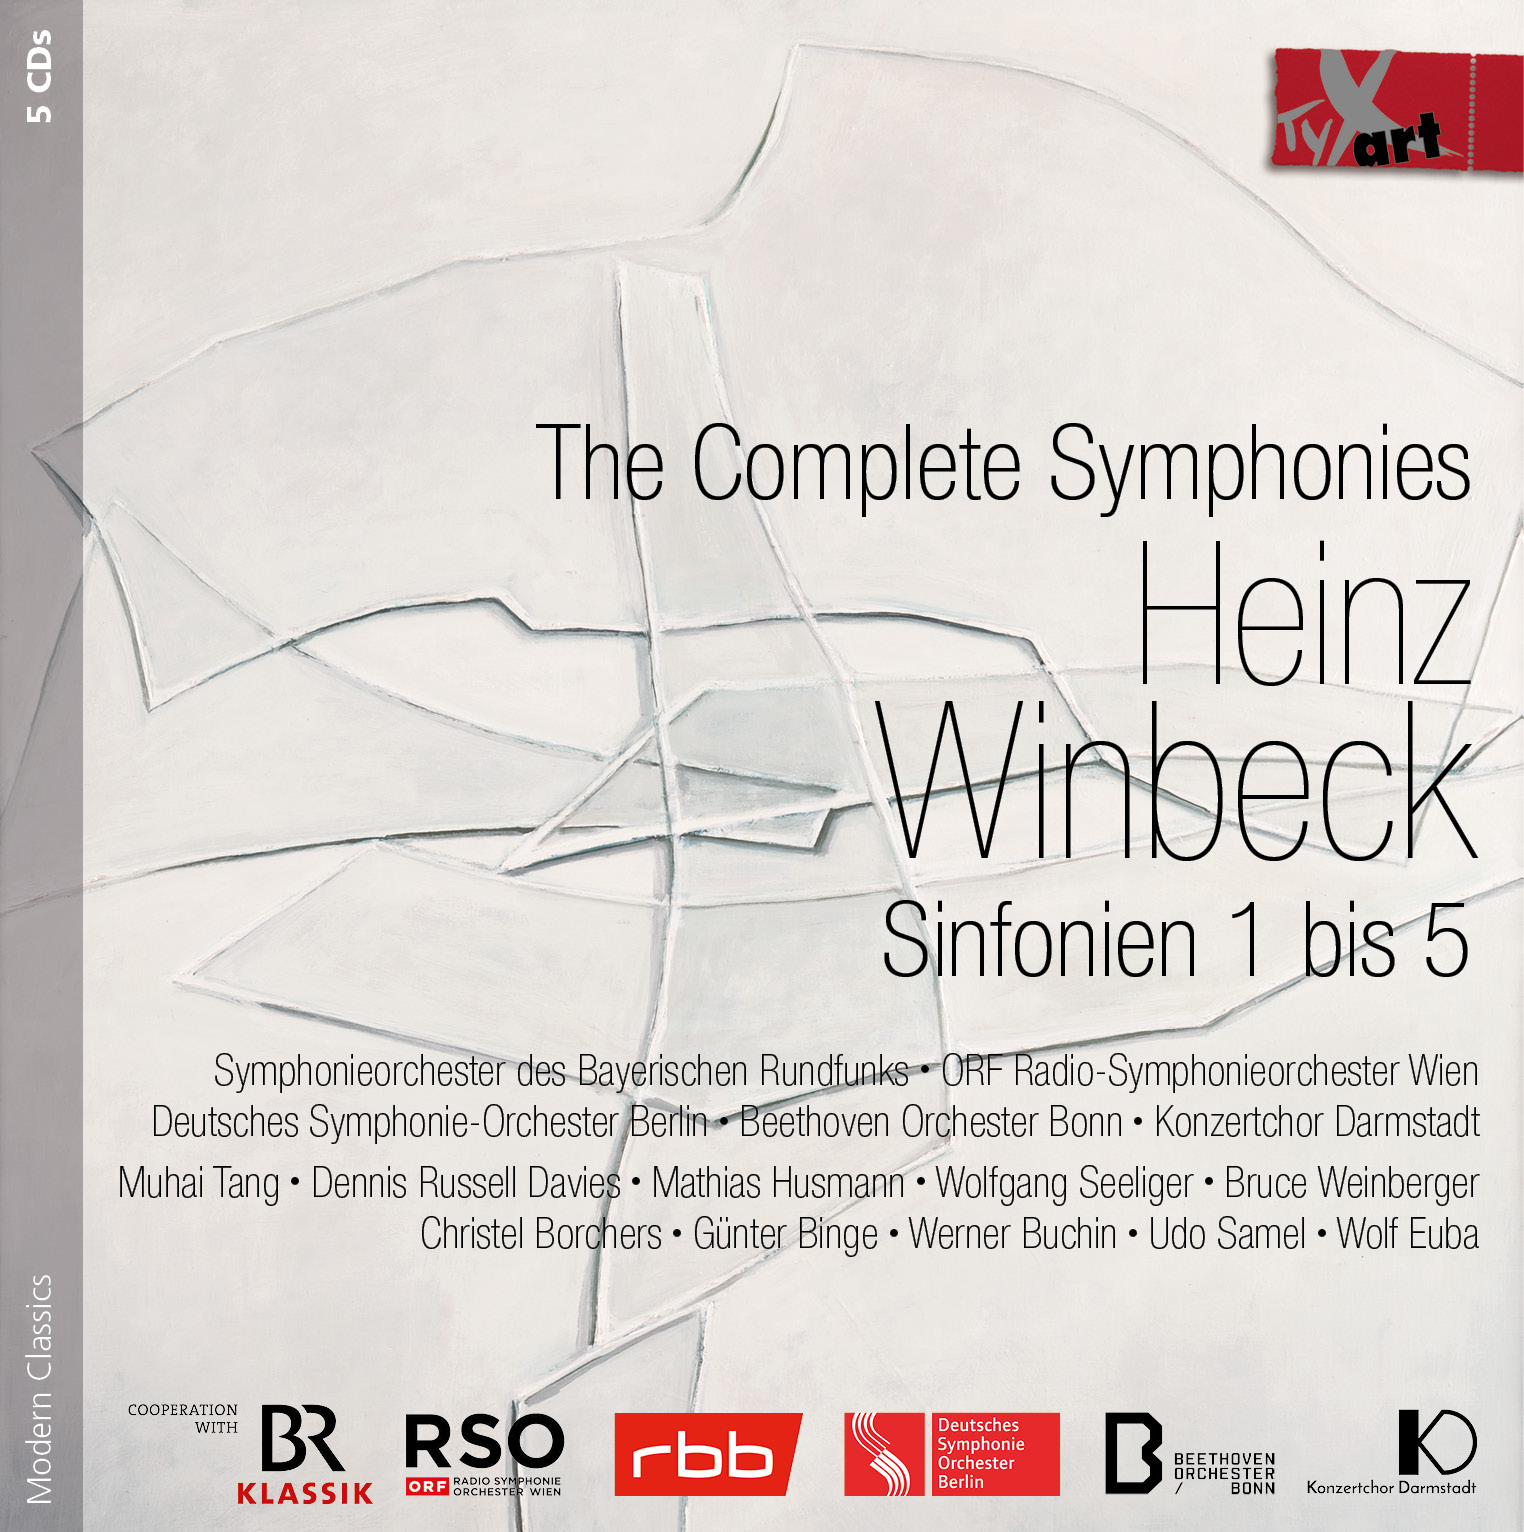 Discography | Heinz Winbeck